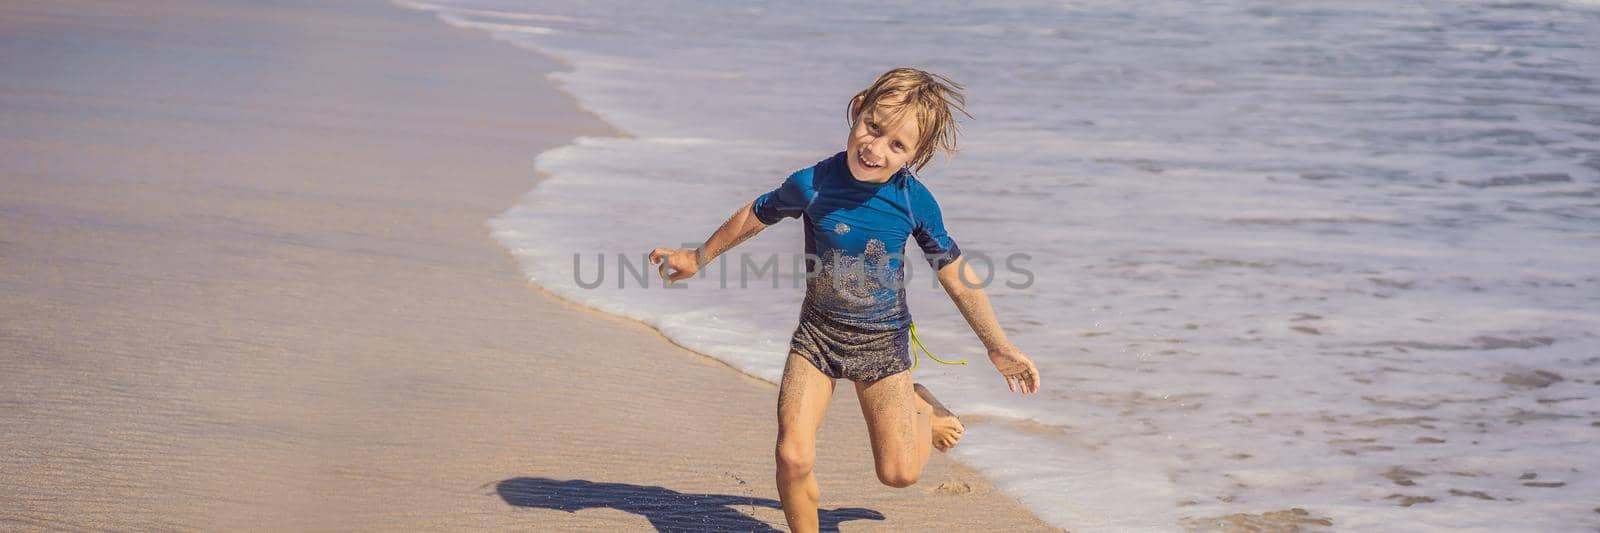 Cute little boy having fun on tropical beach during summer vacation. BANNER, LONG FORMAT